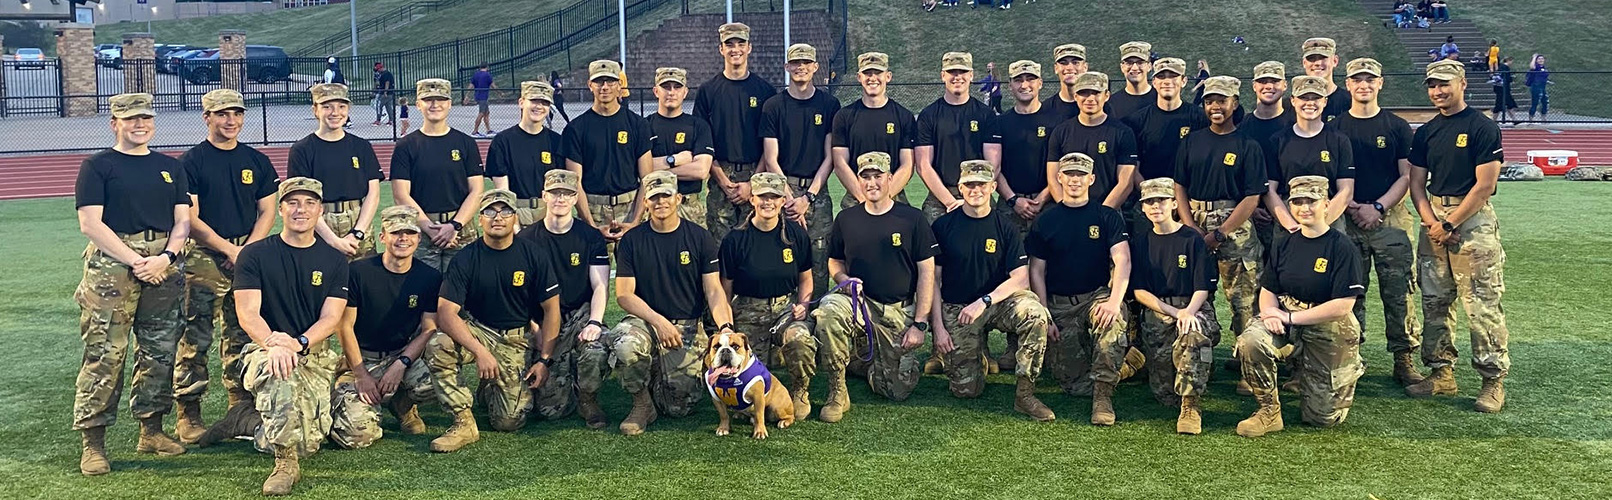 group photo of ROTC cadets at football stadium